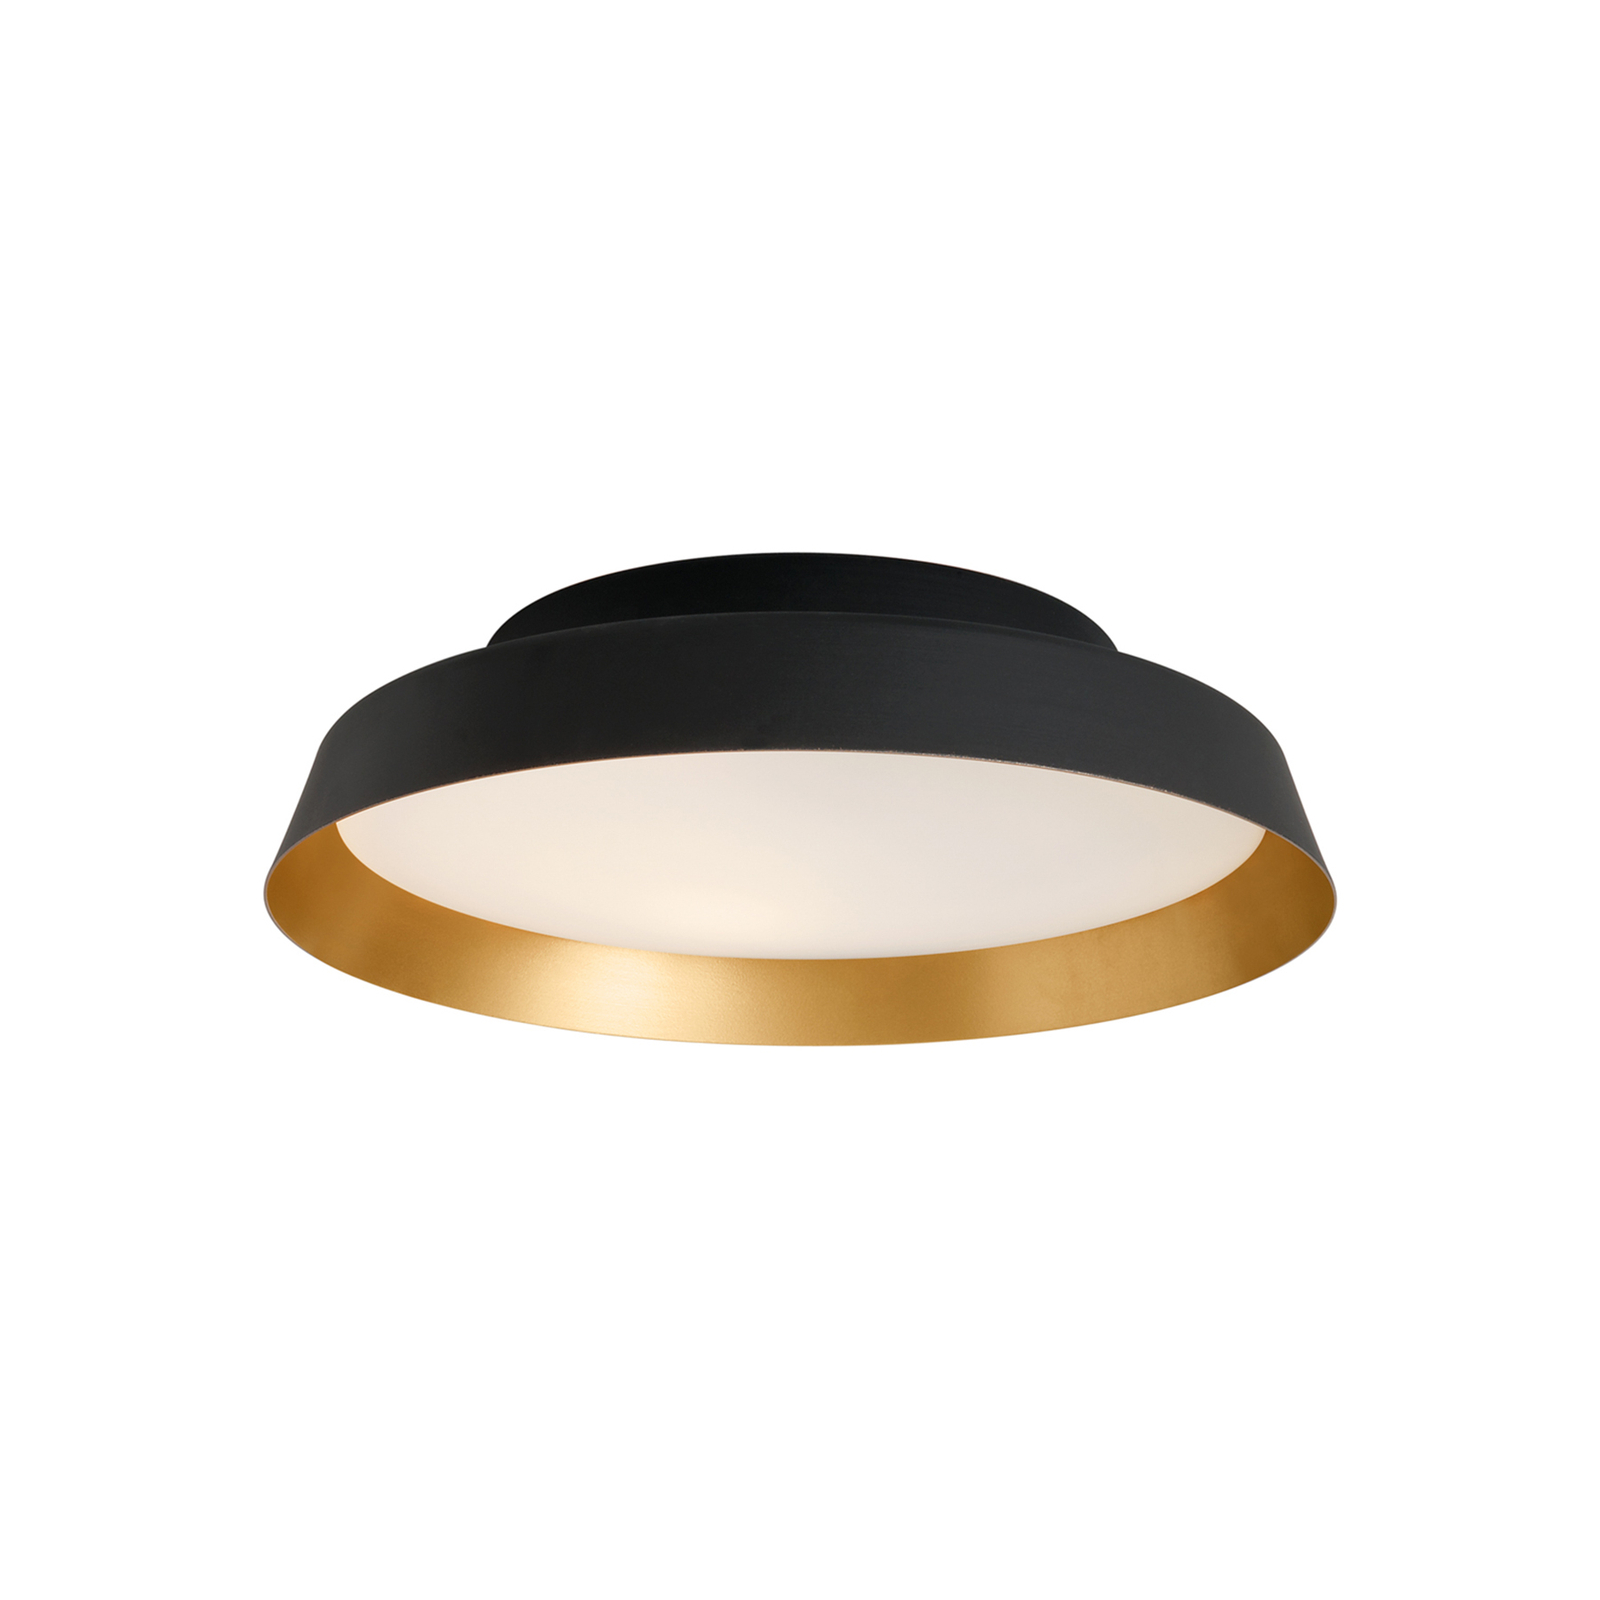 LED plafondlamp Boop! Ø37cm zwart/goud